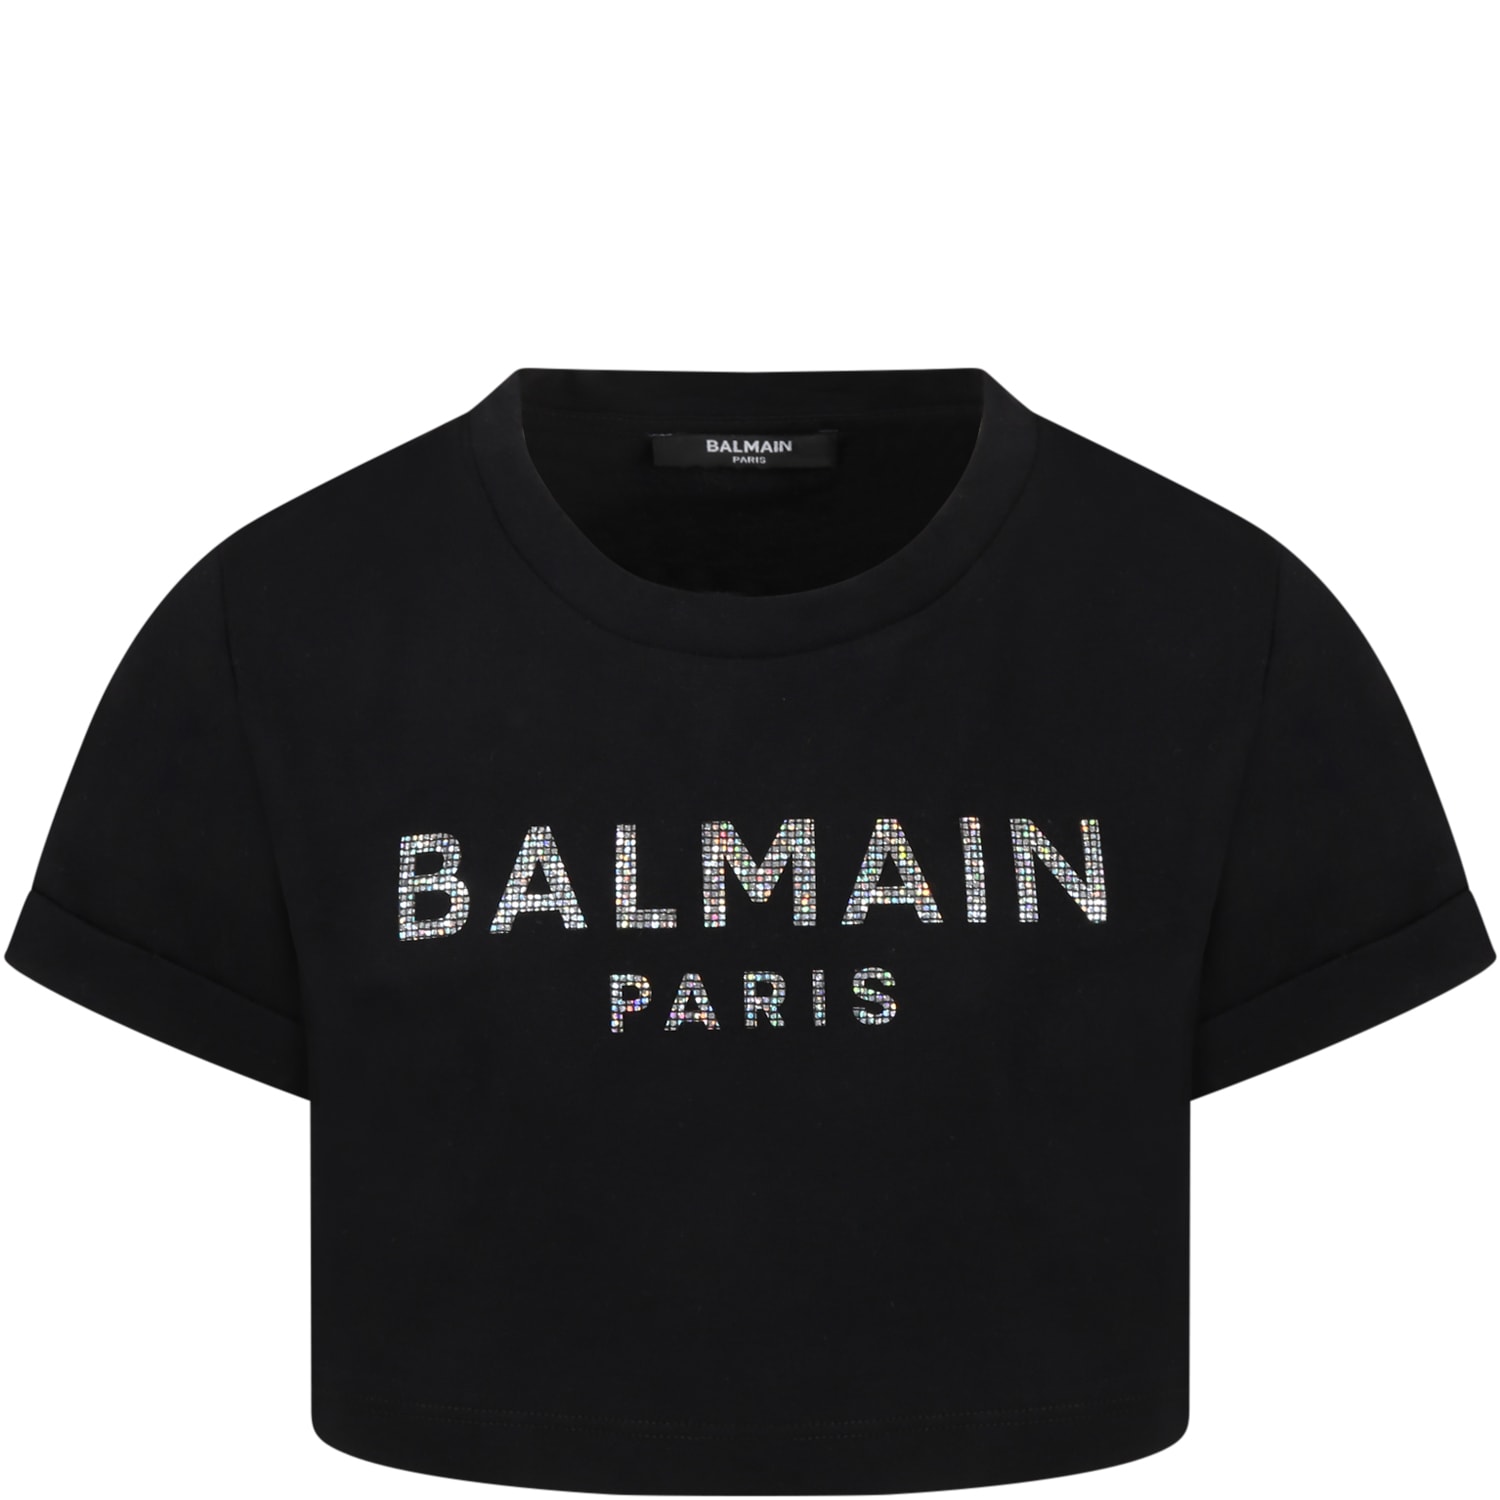 Balmain Black T-shirt For Girl With Rhinestoned Logo